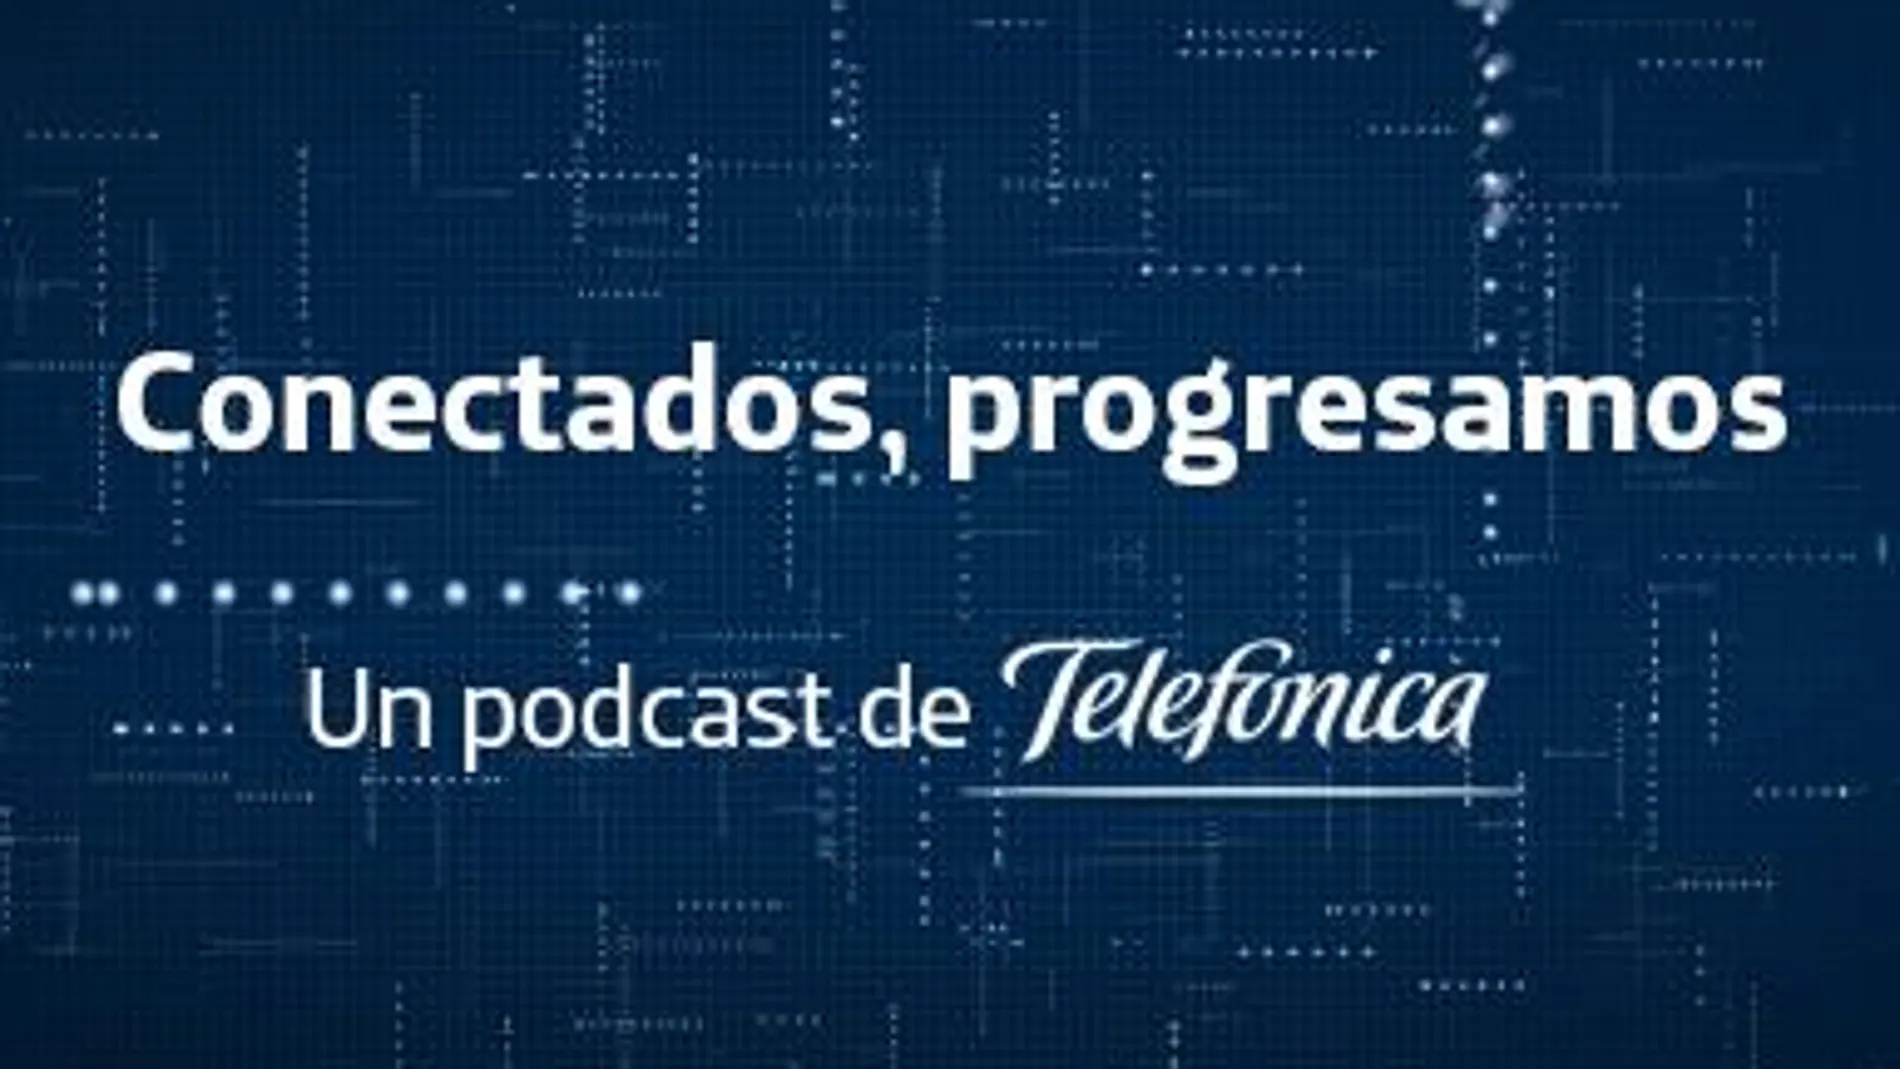 'Conectados, progresamos', un podcast de Telefónica